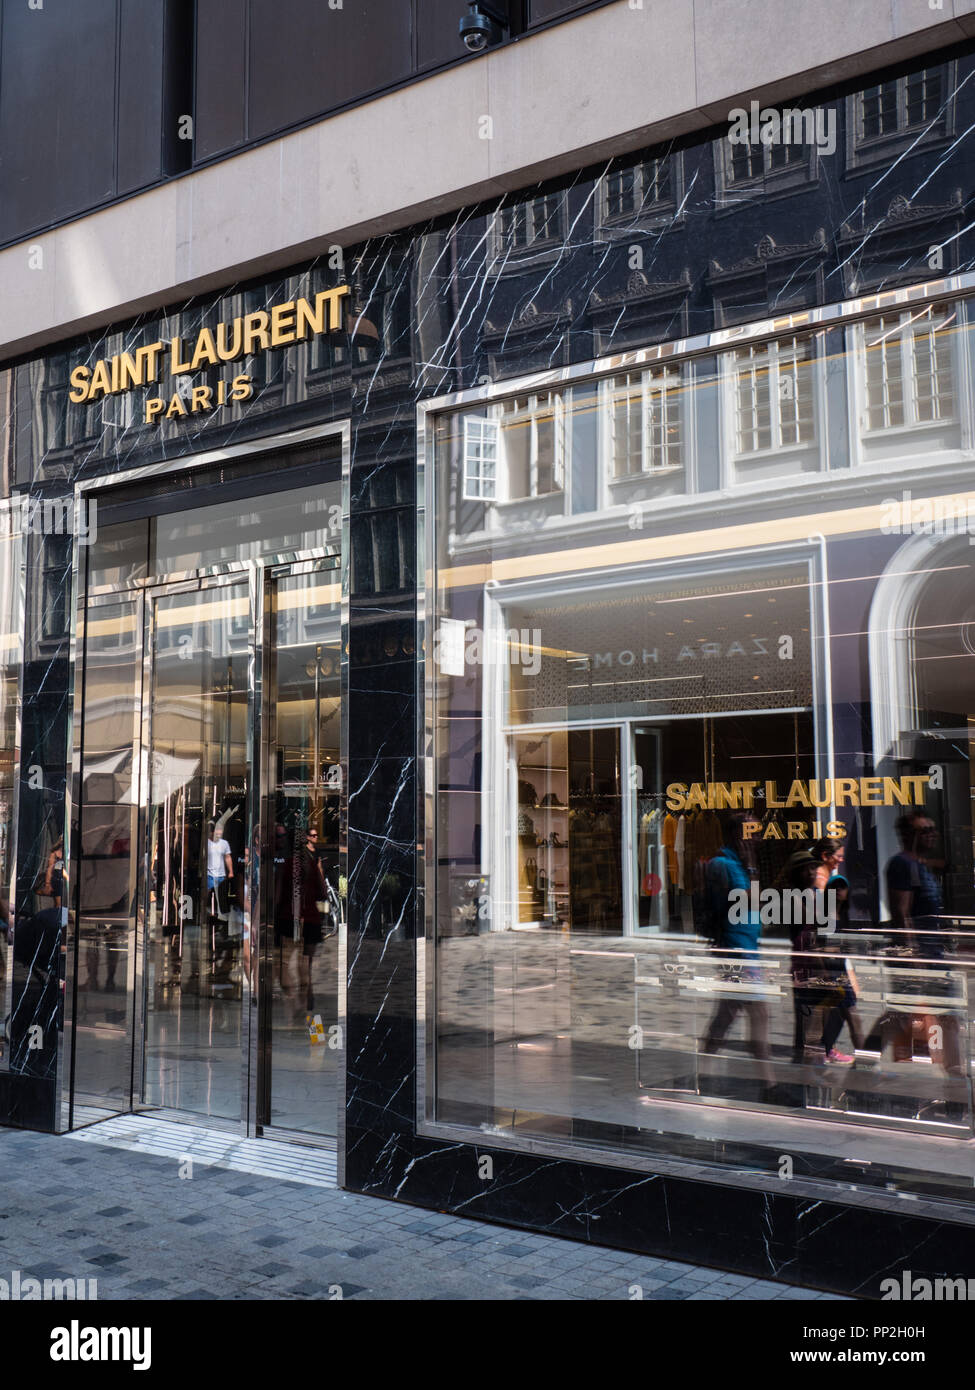 Saint Laurent Paris, Luxury Shop, Copenhagen, Zealand, Denmark, Europe  Stock Photo - Alamy